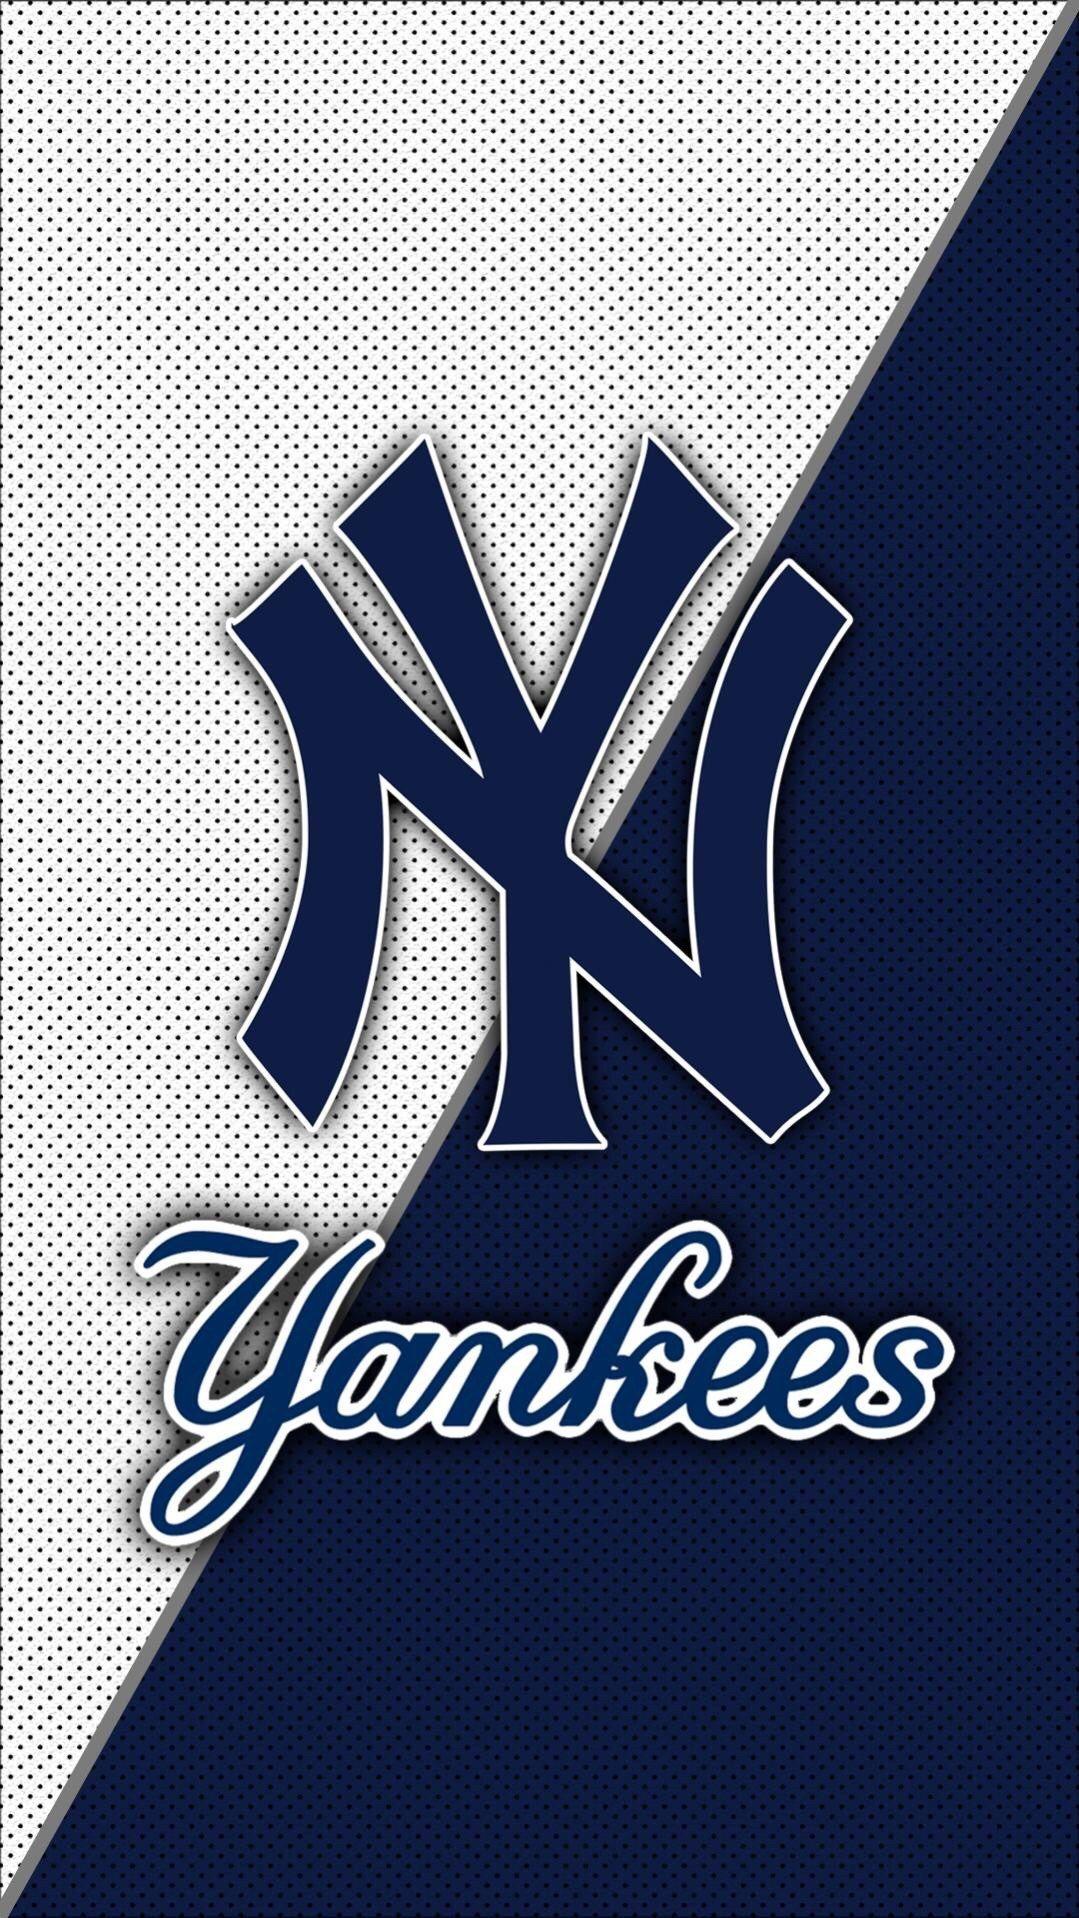 Yankees Wallpapers Top Free Yankees Backgrounds WallpaperAccess